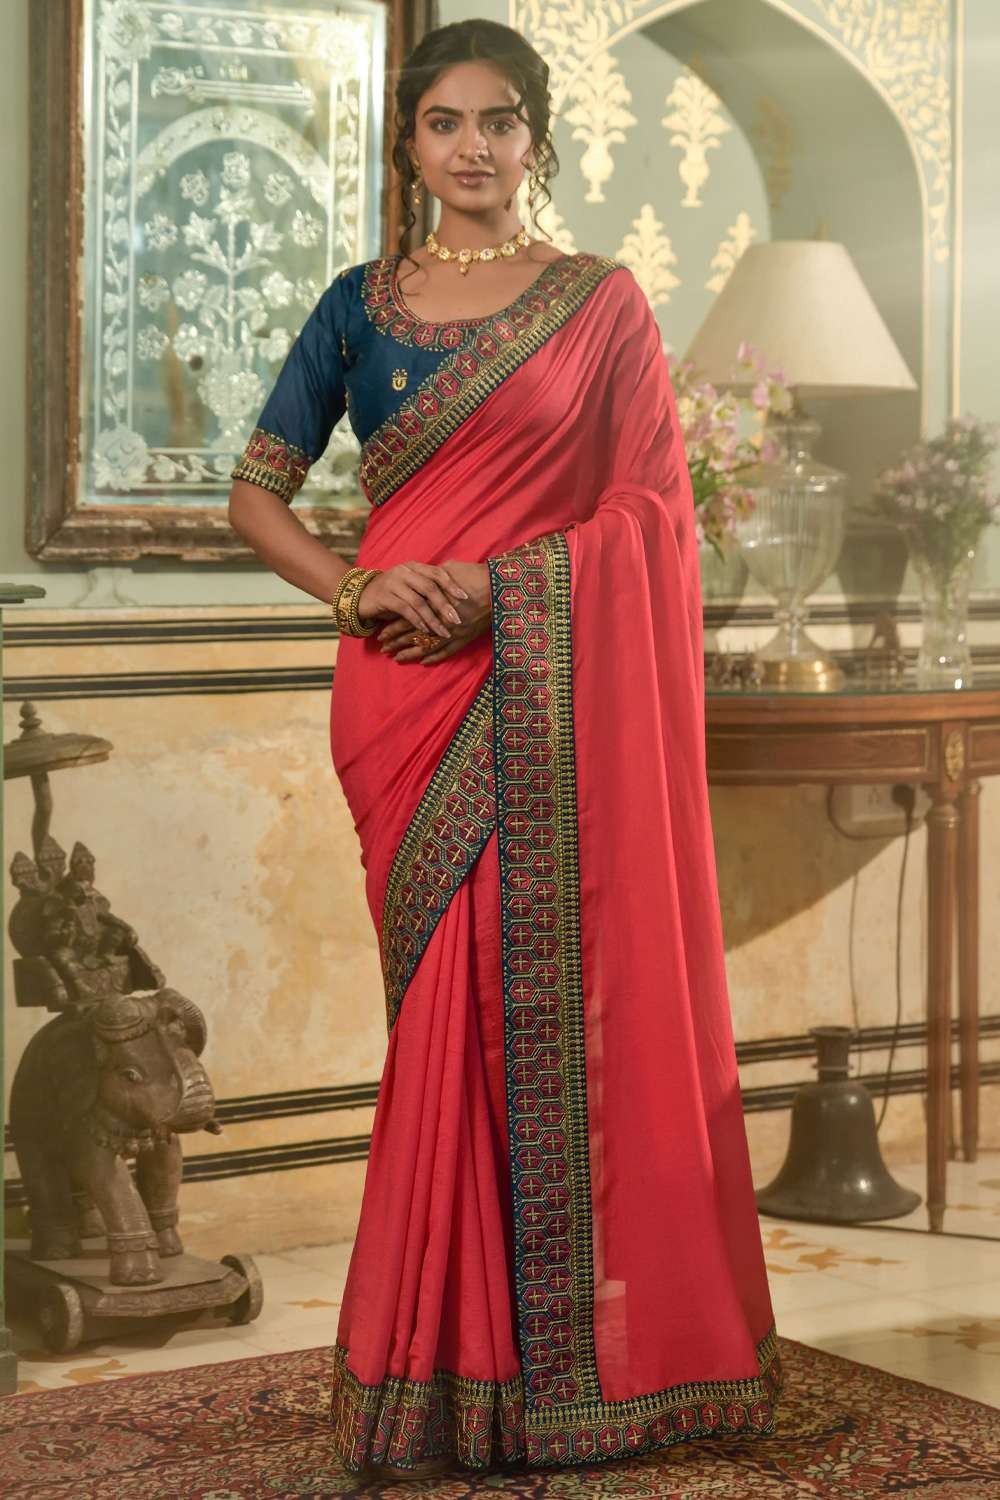 Gajri Colour Ethnic Banarasi Silk Saree For Cultural Looks - KSM PRINTS -  4131581